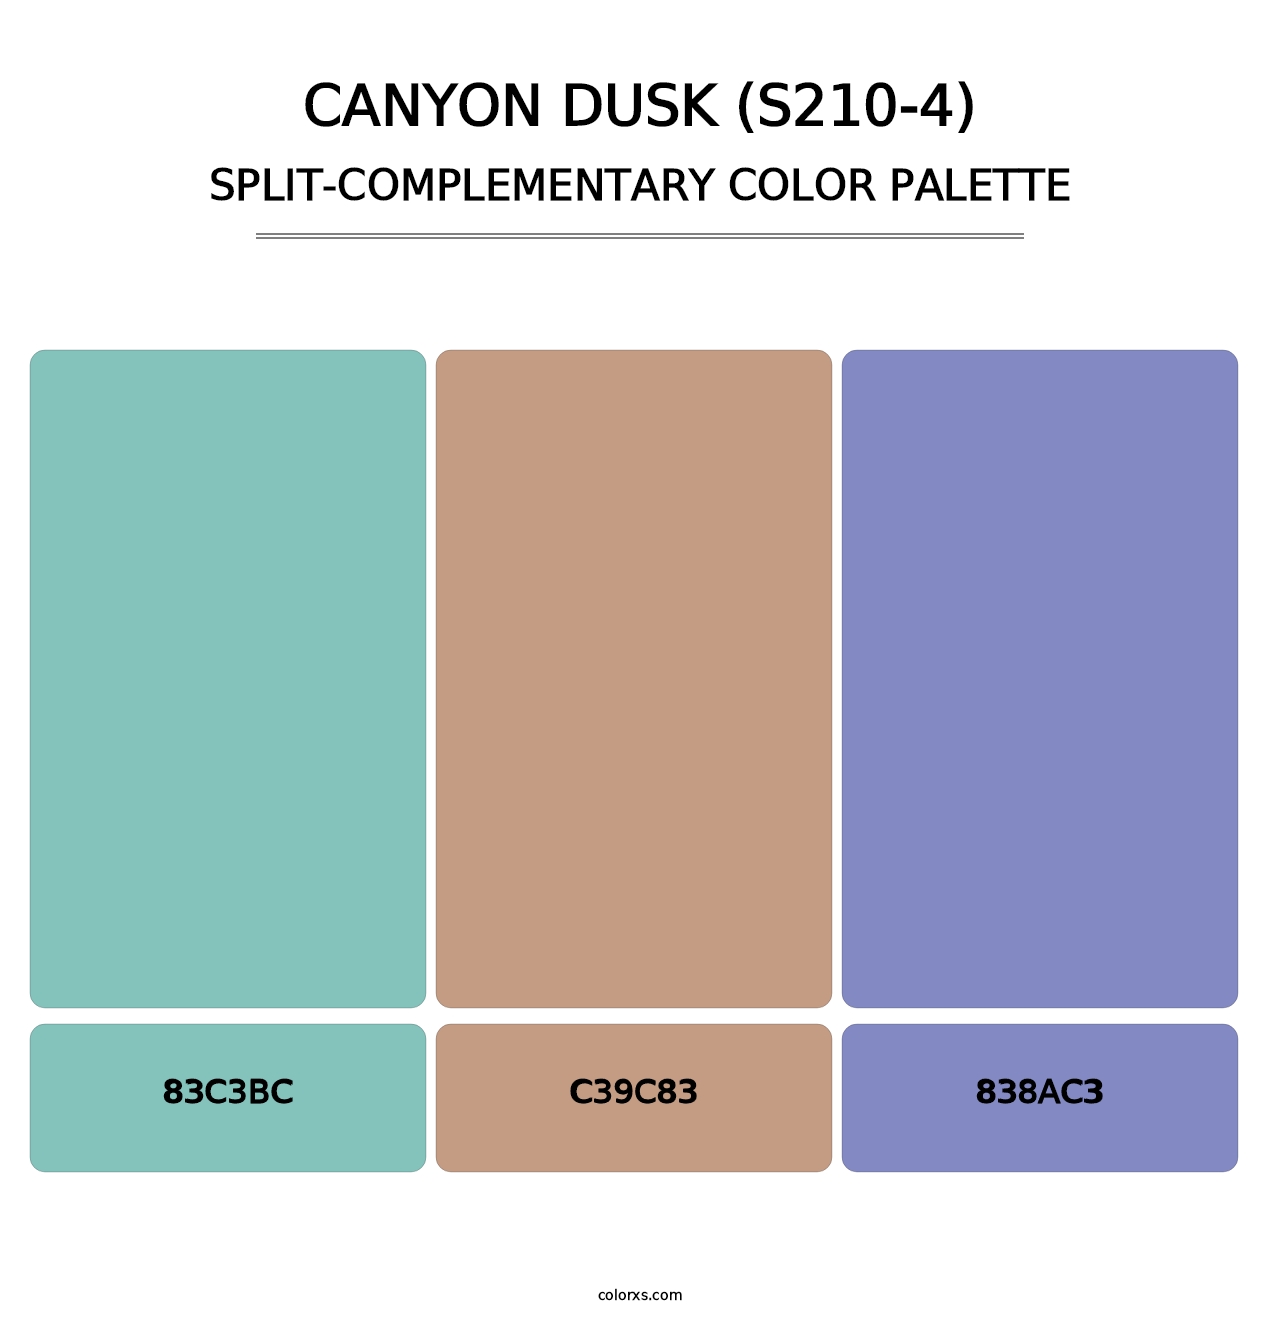 Canyon Dusk (S210-4) - Split-Complementary Color Palette